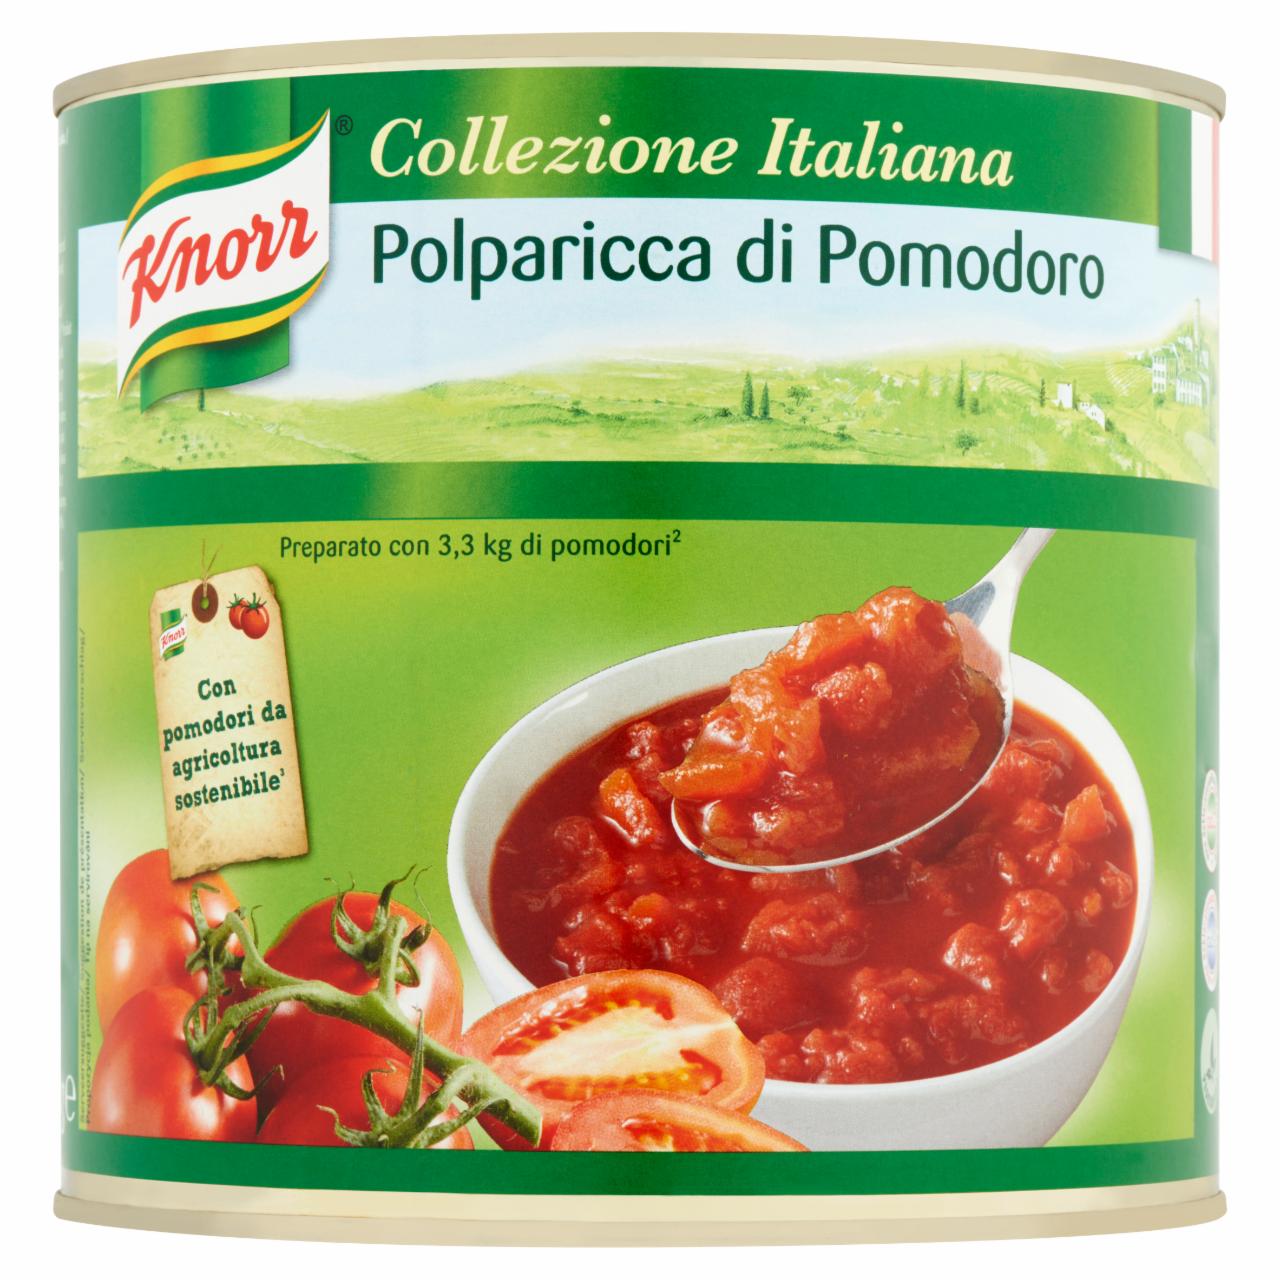 Képek - Knorr Polparicca di Pomodoro hámozott, kockázott paradicsom 2,55 kg